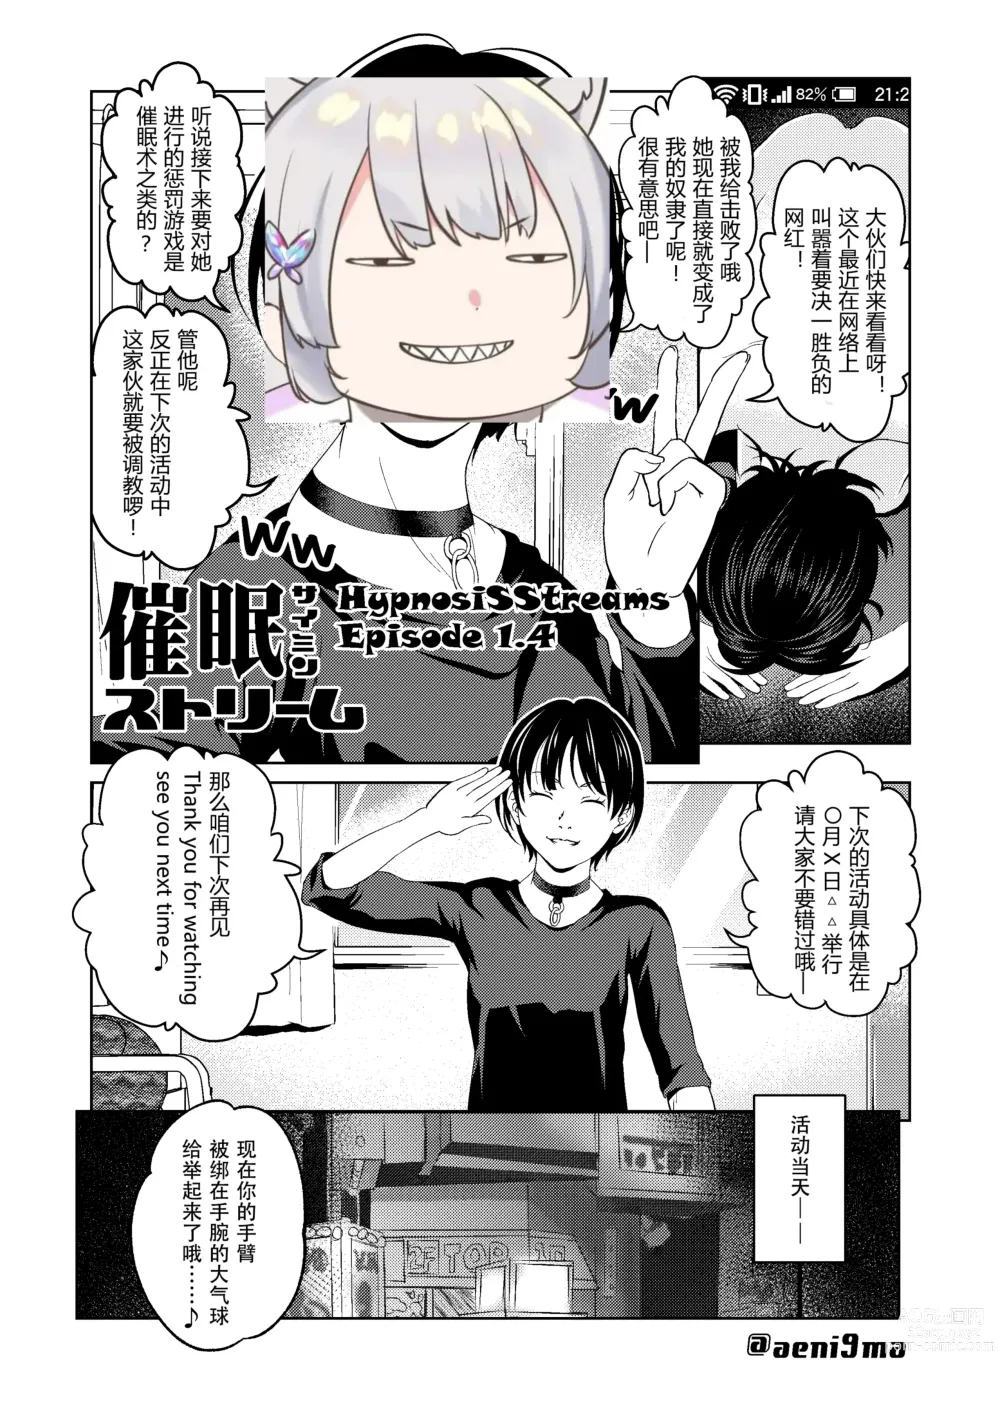 Page 1 of doujinshi Saimin Stream #1.4